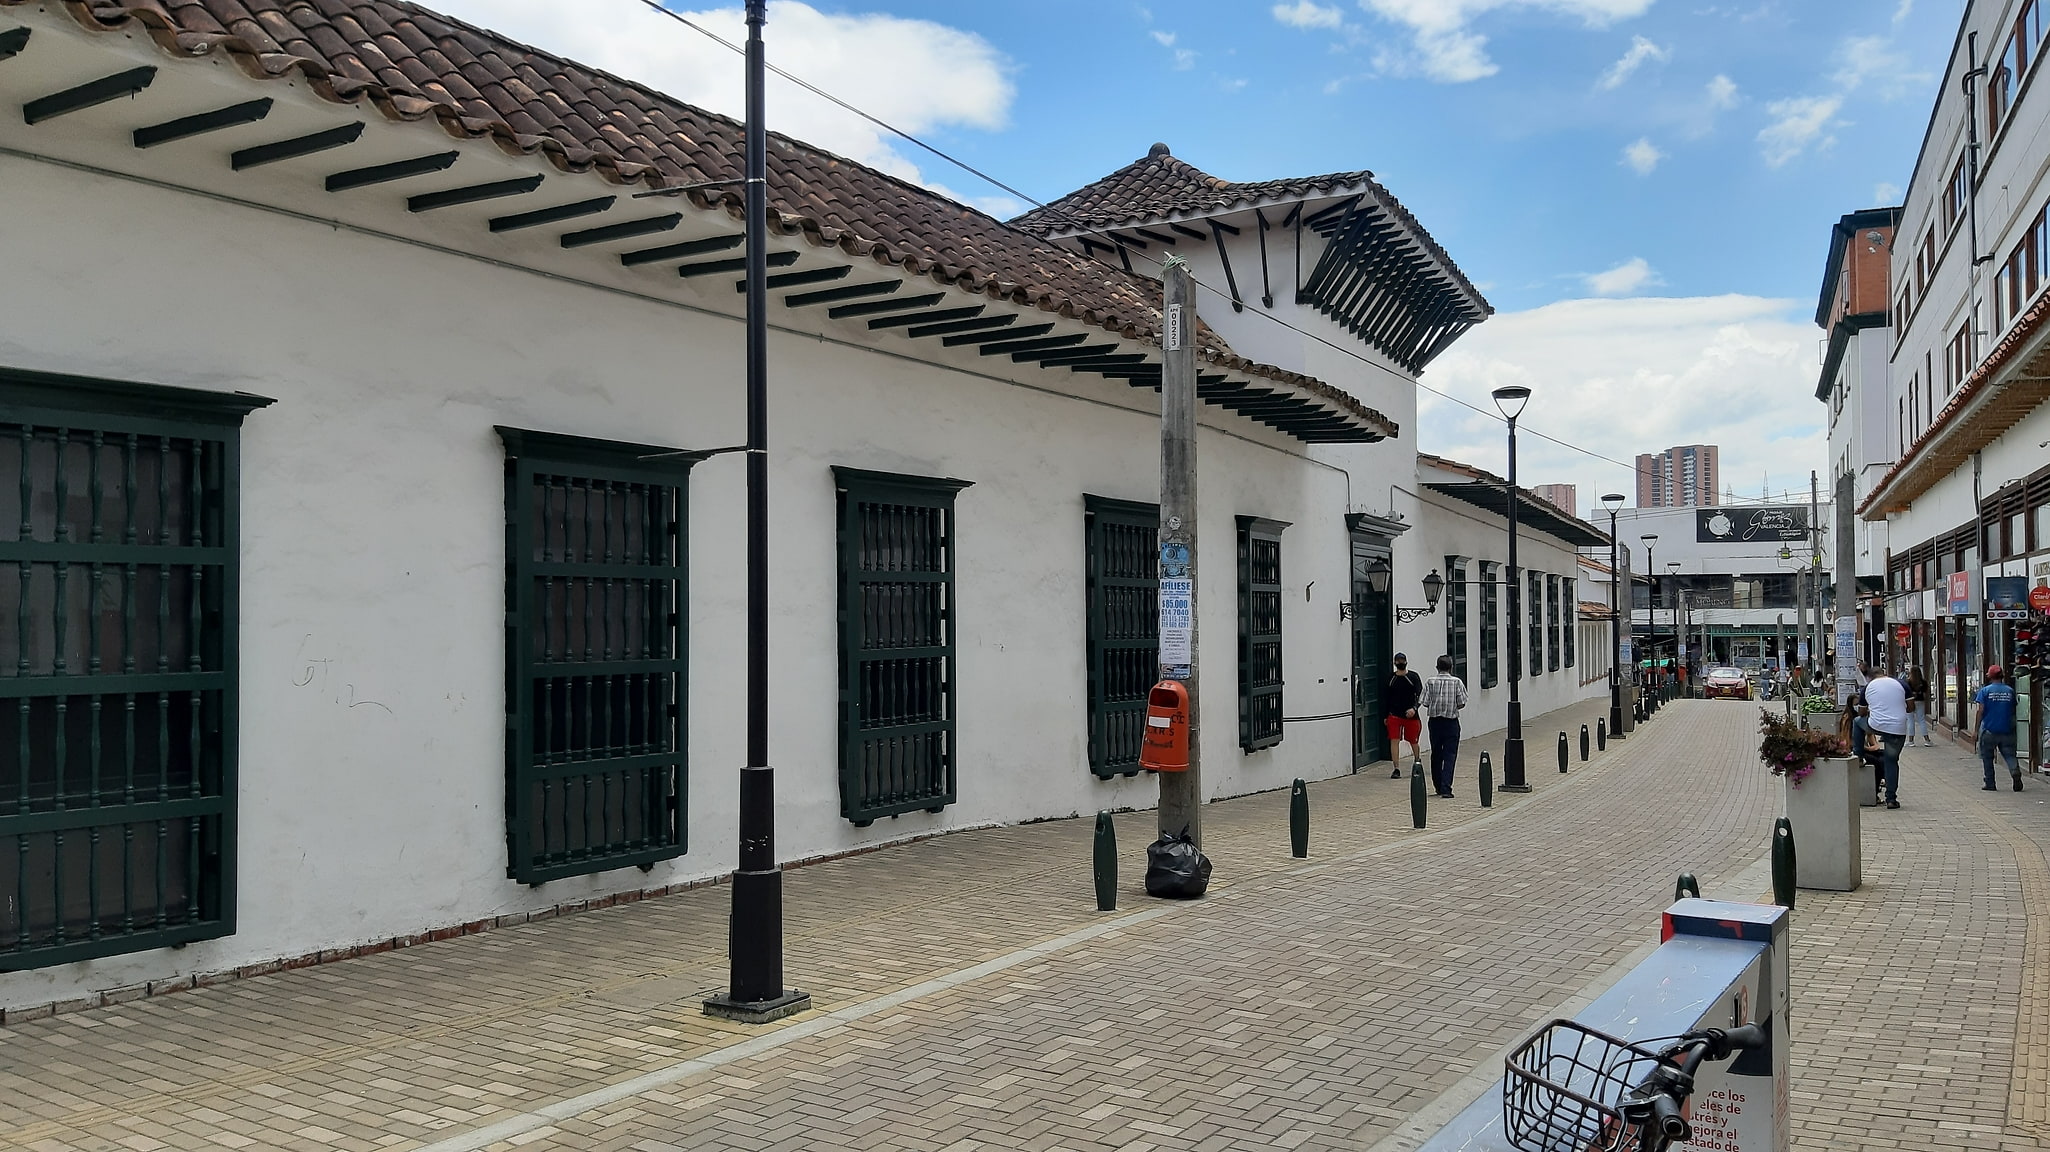 Rionegro, Colombia